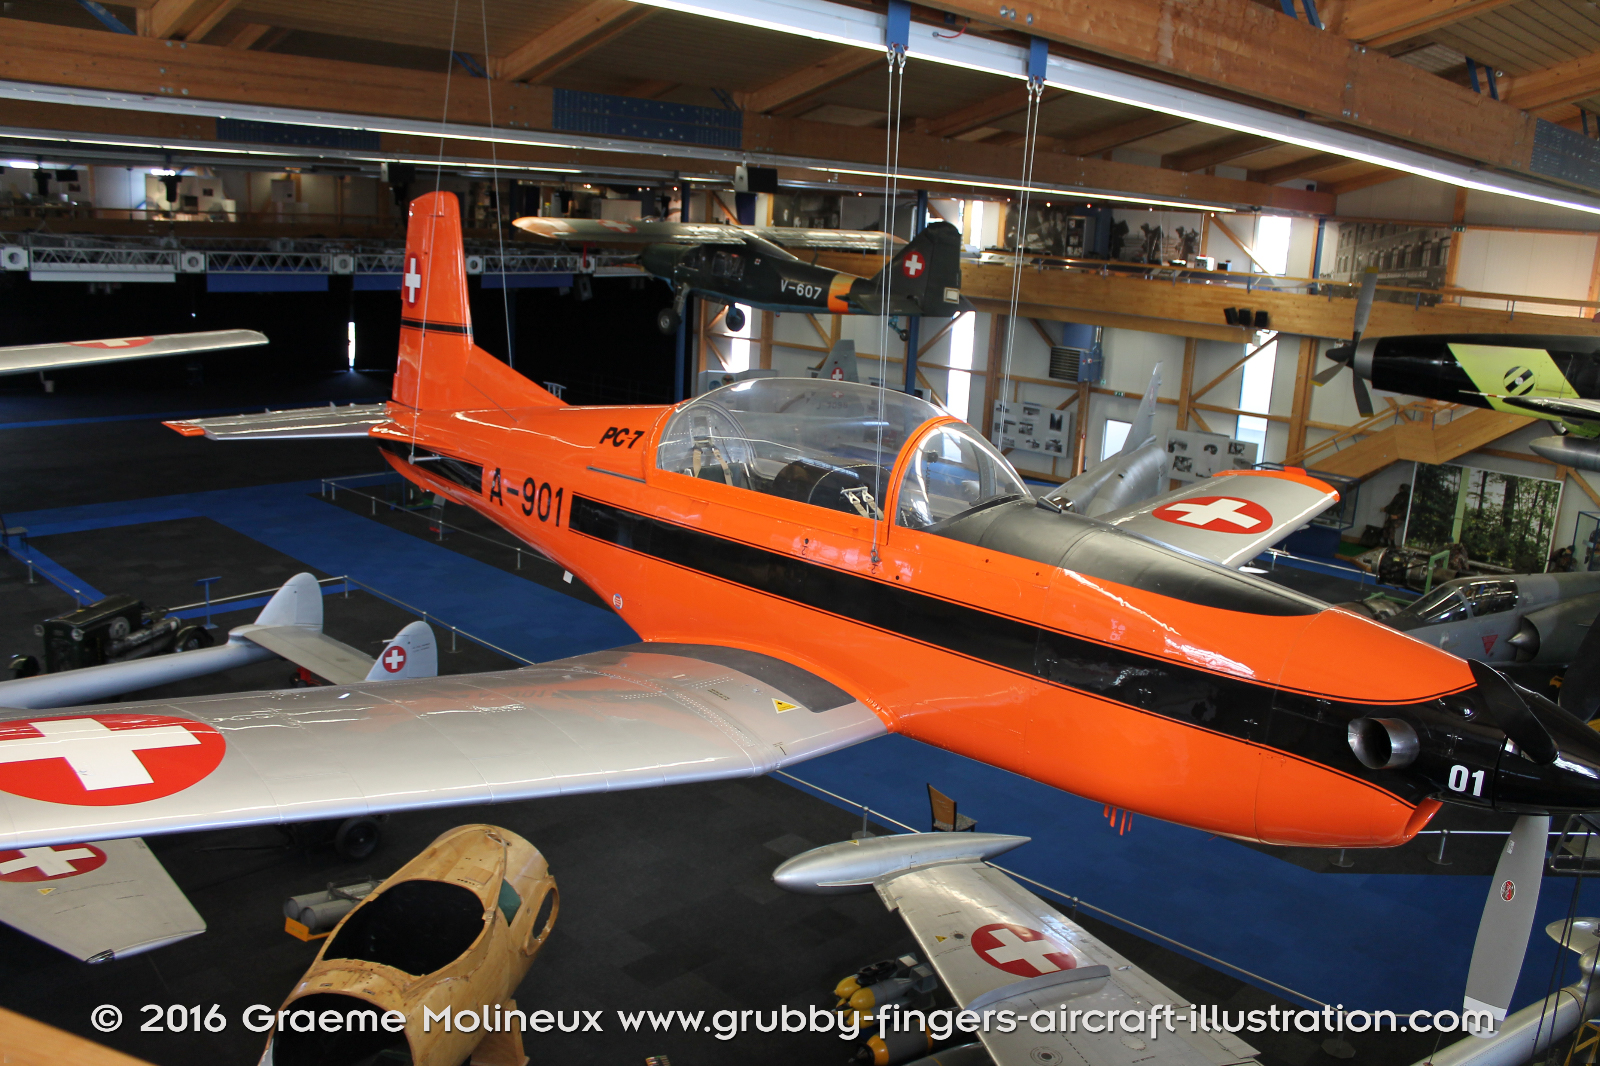 PILATUS_PC-7_A-901_Swiss_Air_Force_Museum_2015_02_GrubbyFingers